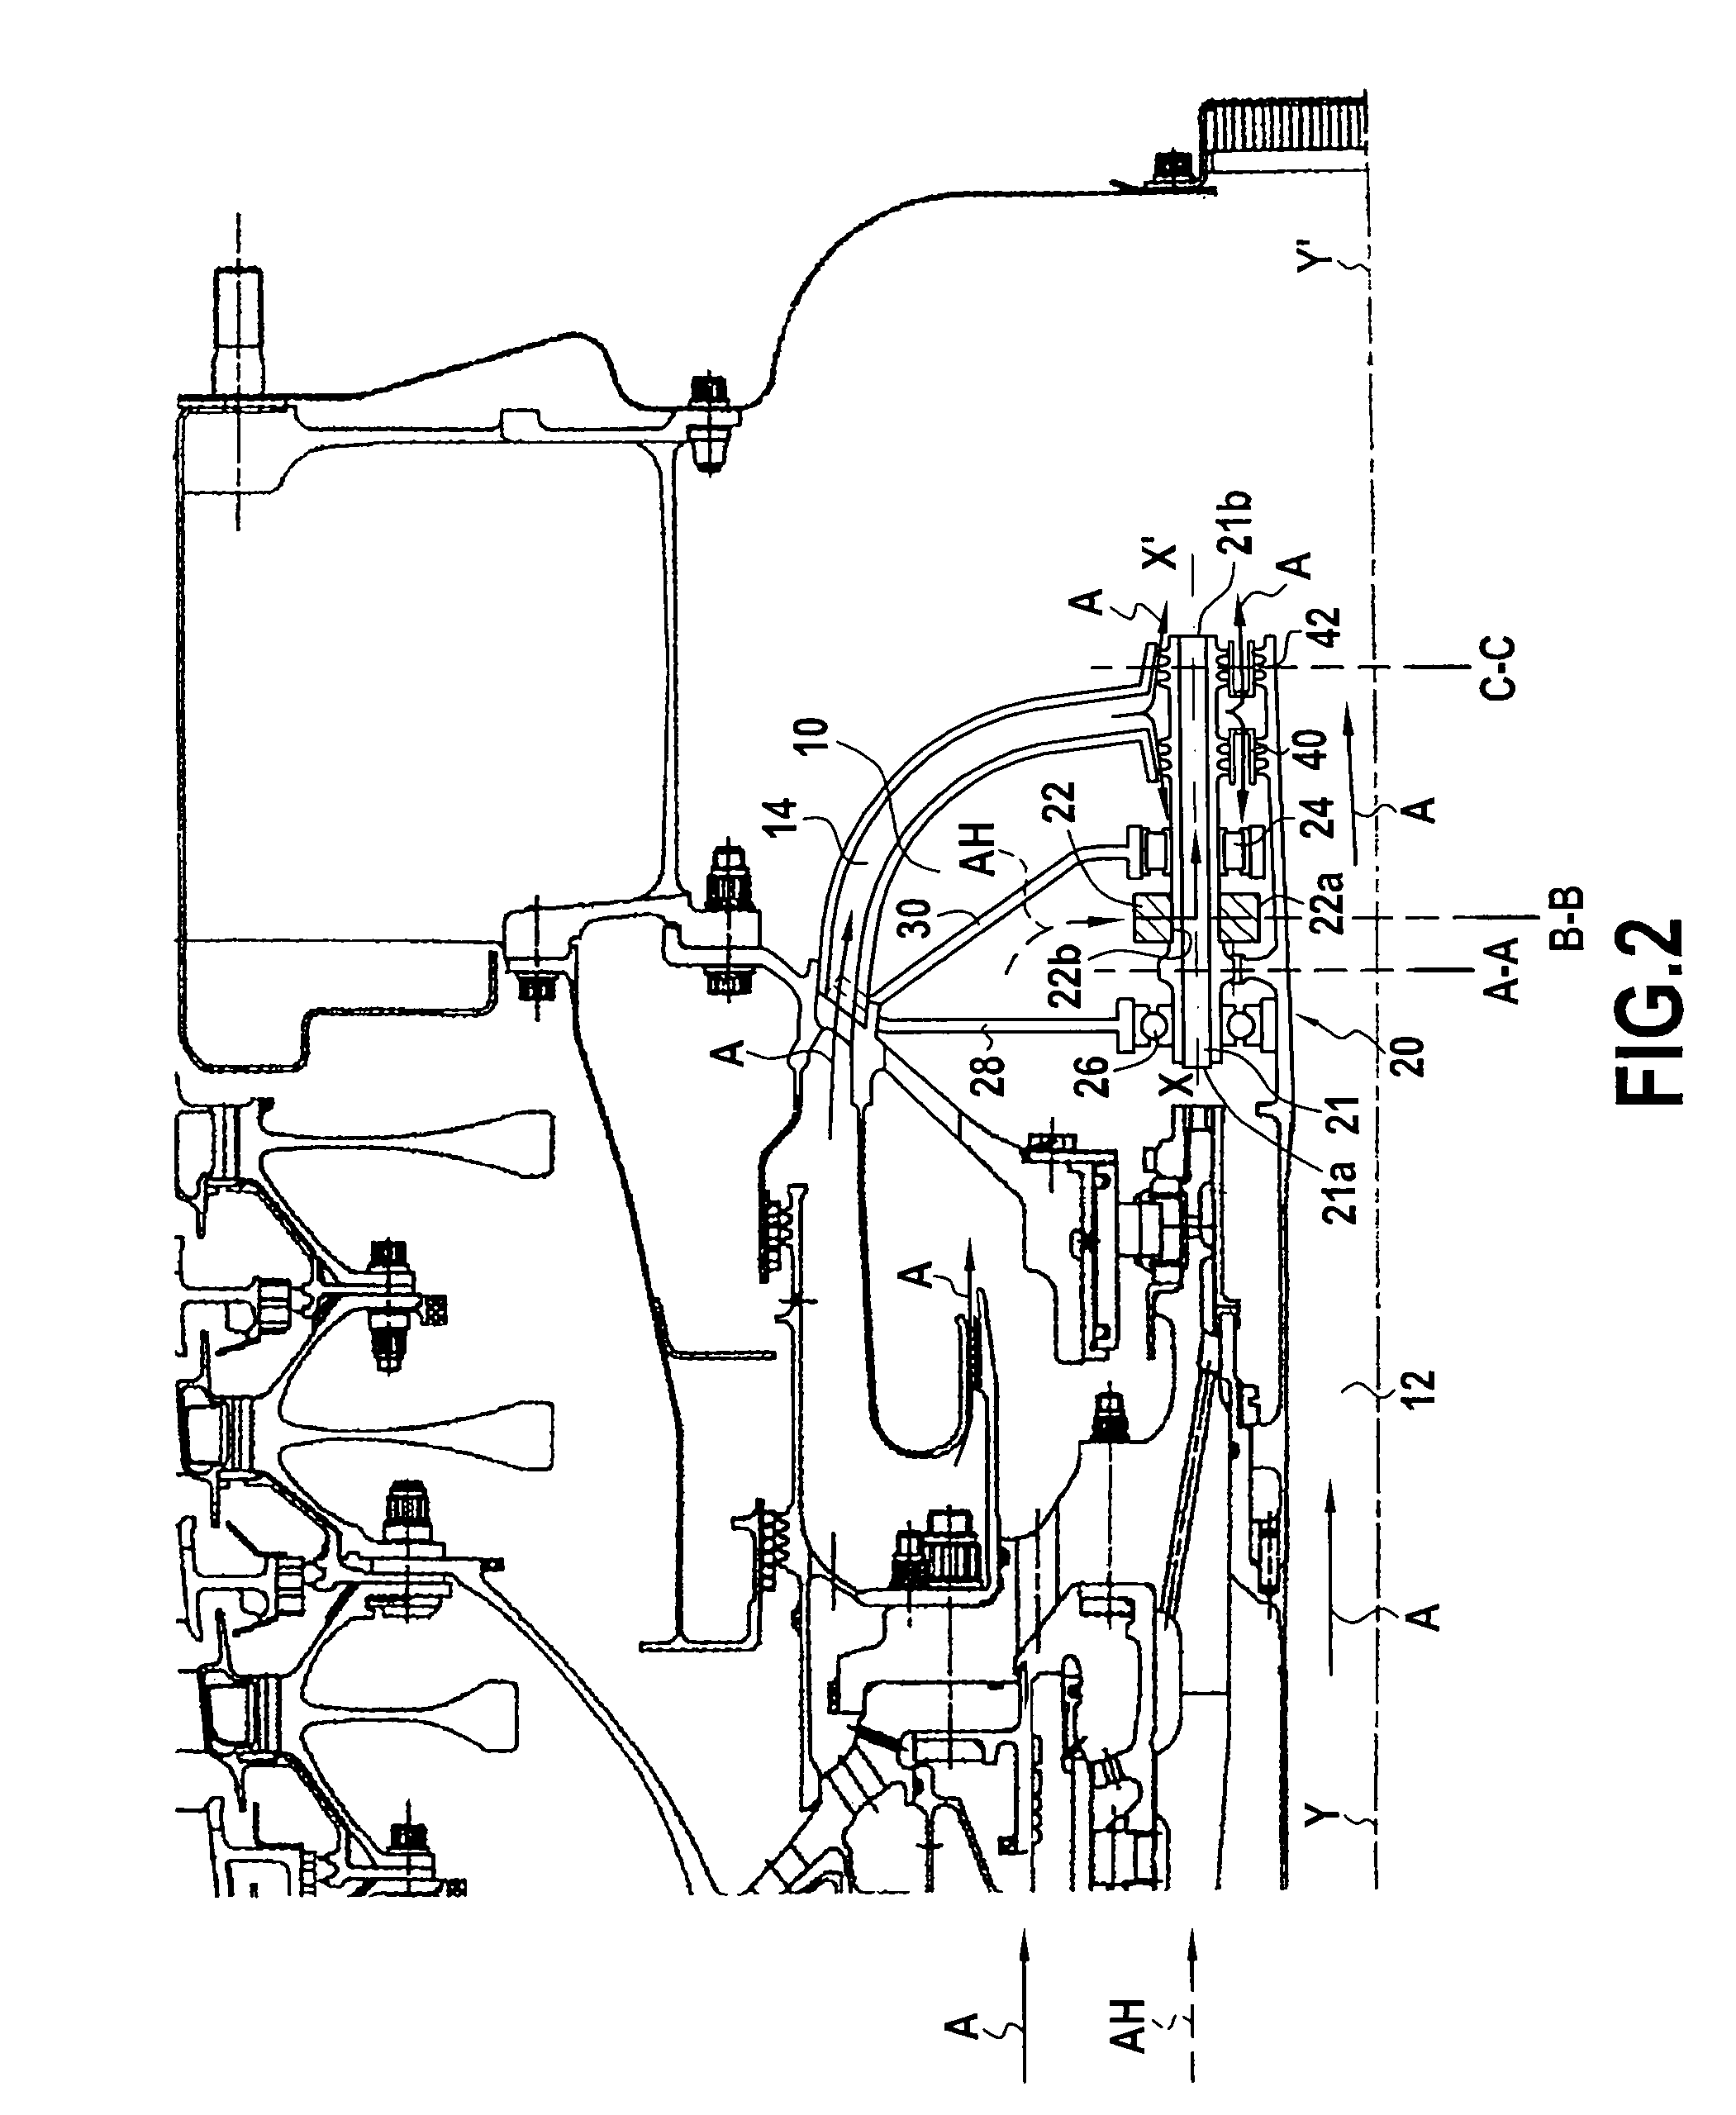 De-oiler system for an aircraft engine